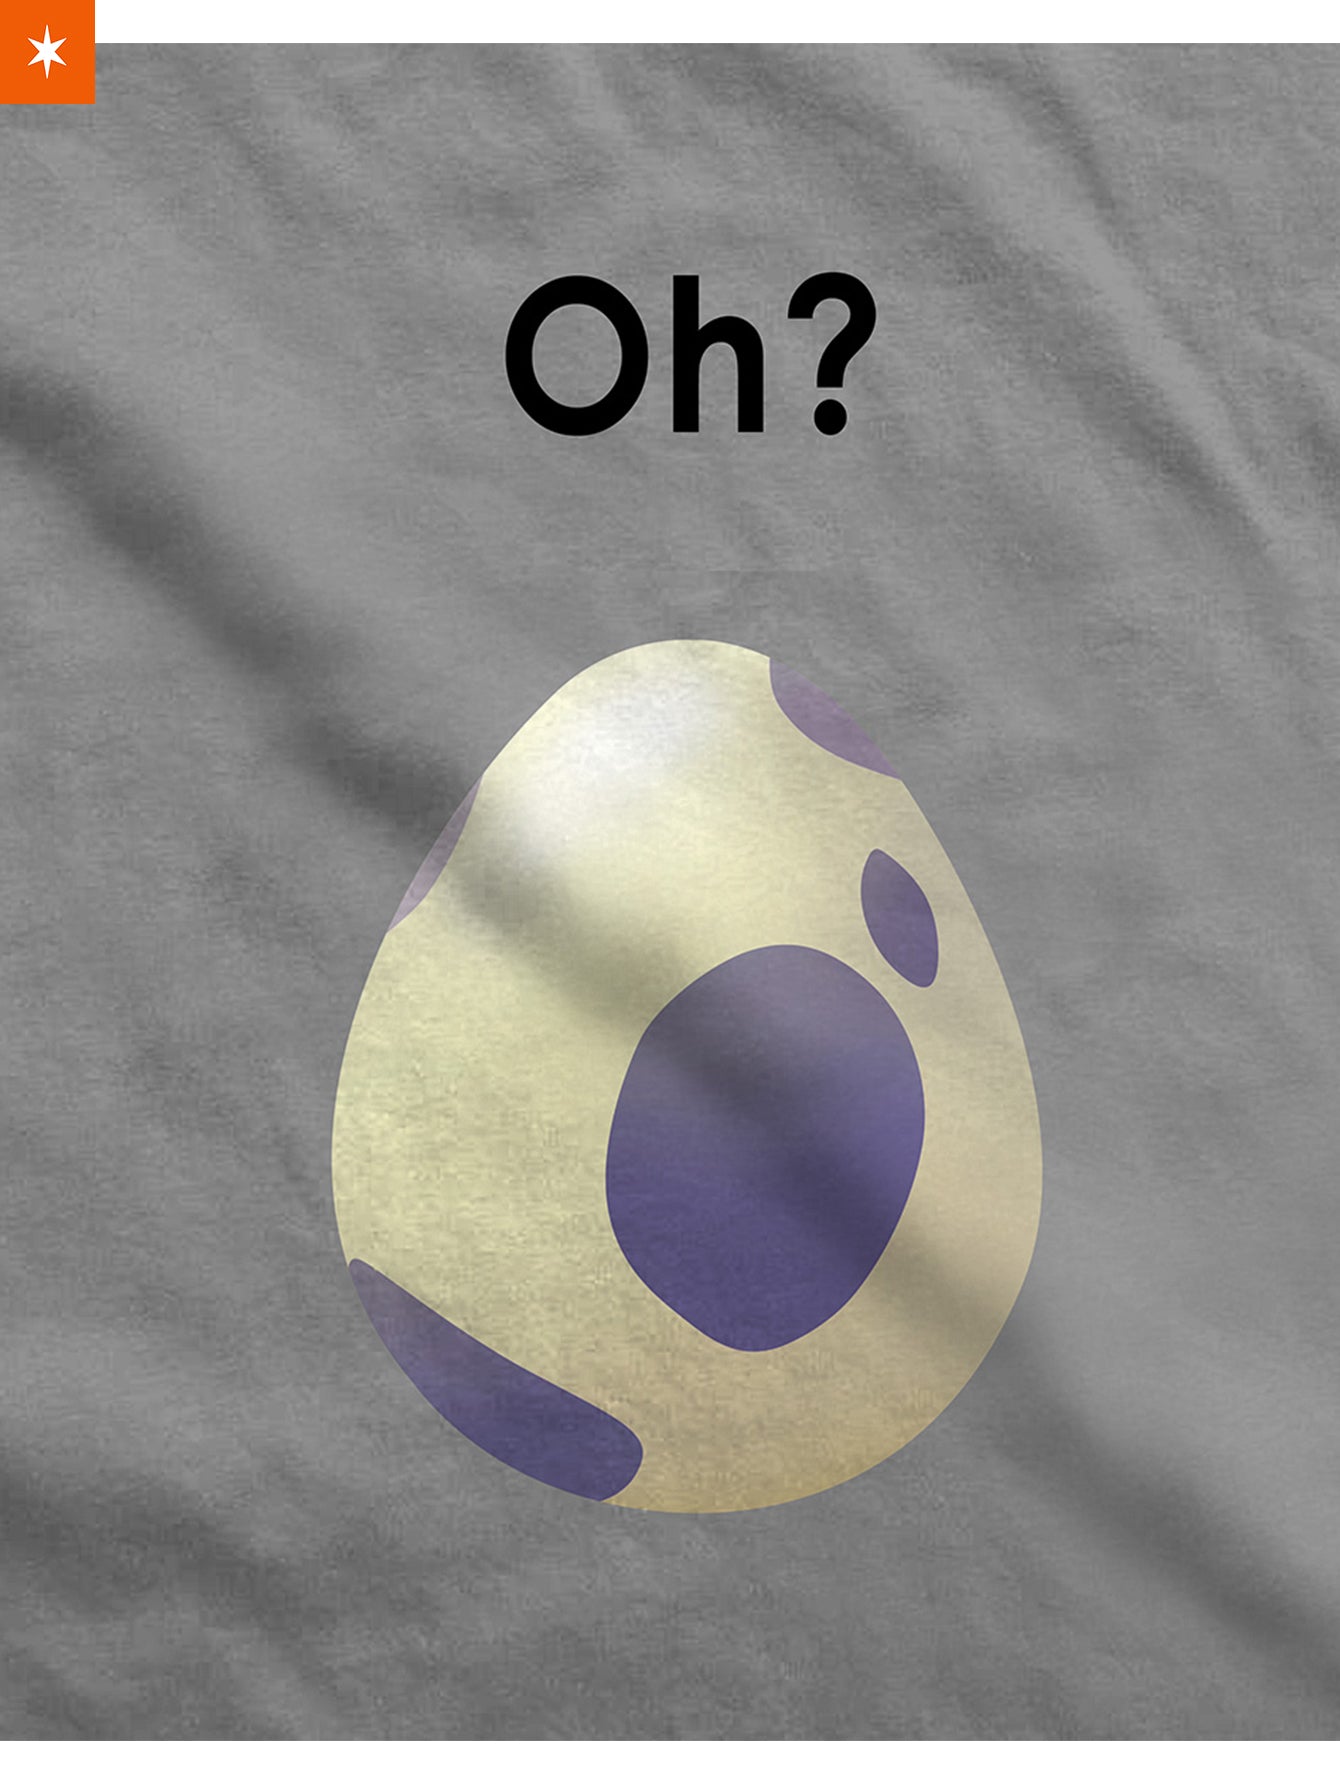 Fandomaniax - 10km Poke Egg Maternity T-Shirt